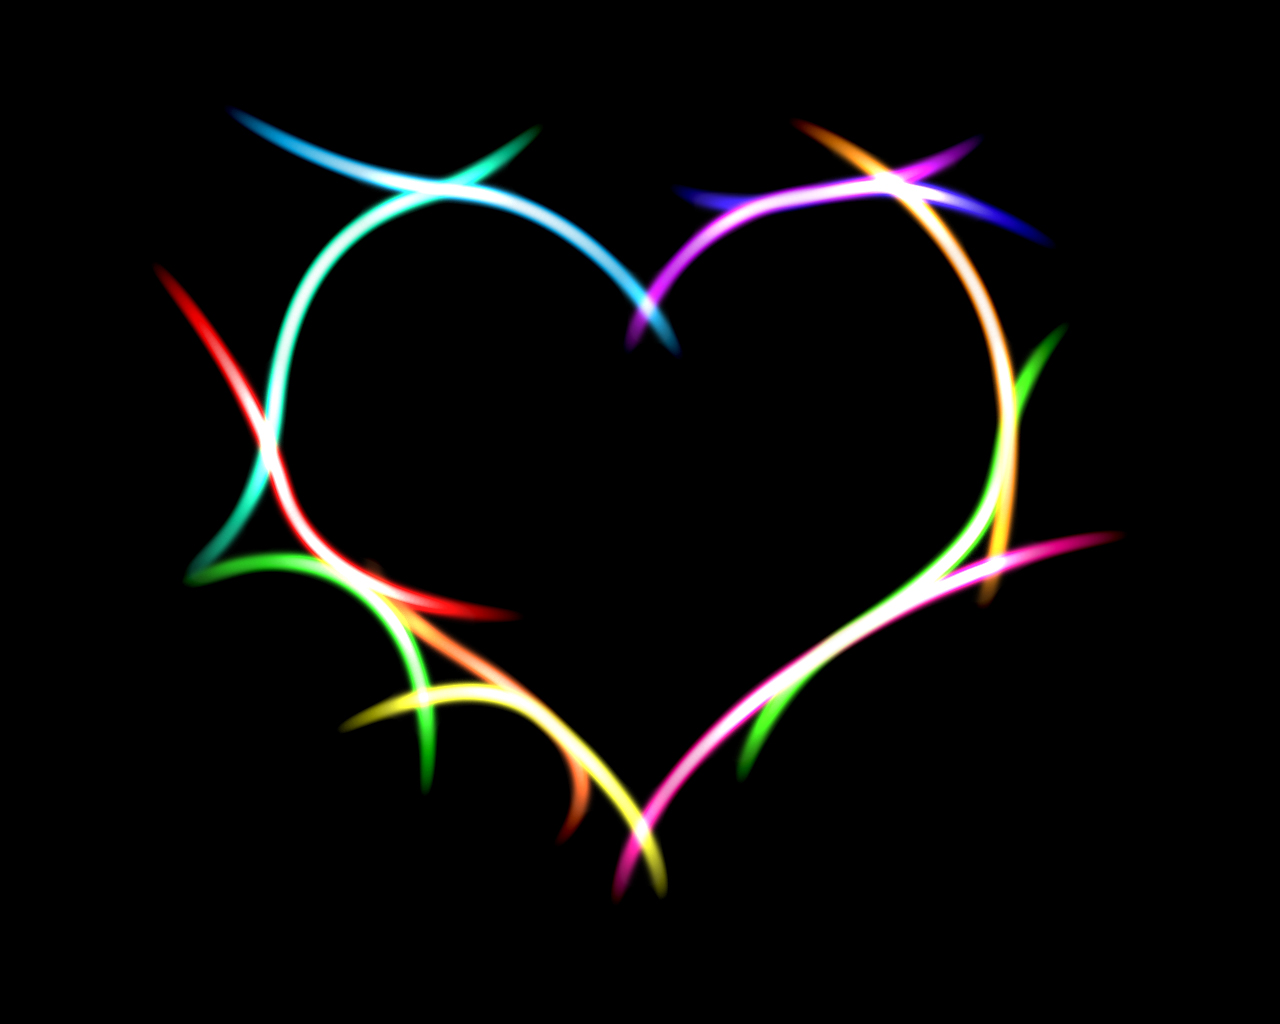 http://4.bp.blogspot.com/-JLUt5cZelfE/TeakDjceH9I/AAAAAAAAAF8/tOsV5lFUYQ0/s1600/Colorized%2BHeart-love-hearts-wallpapers.jpeg